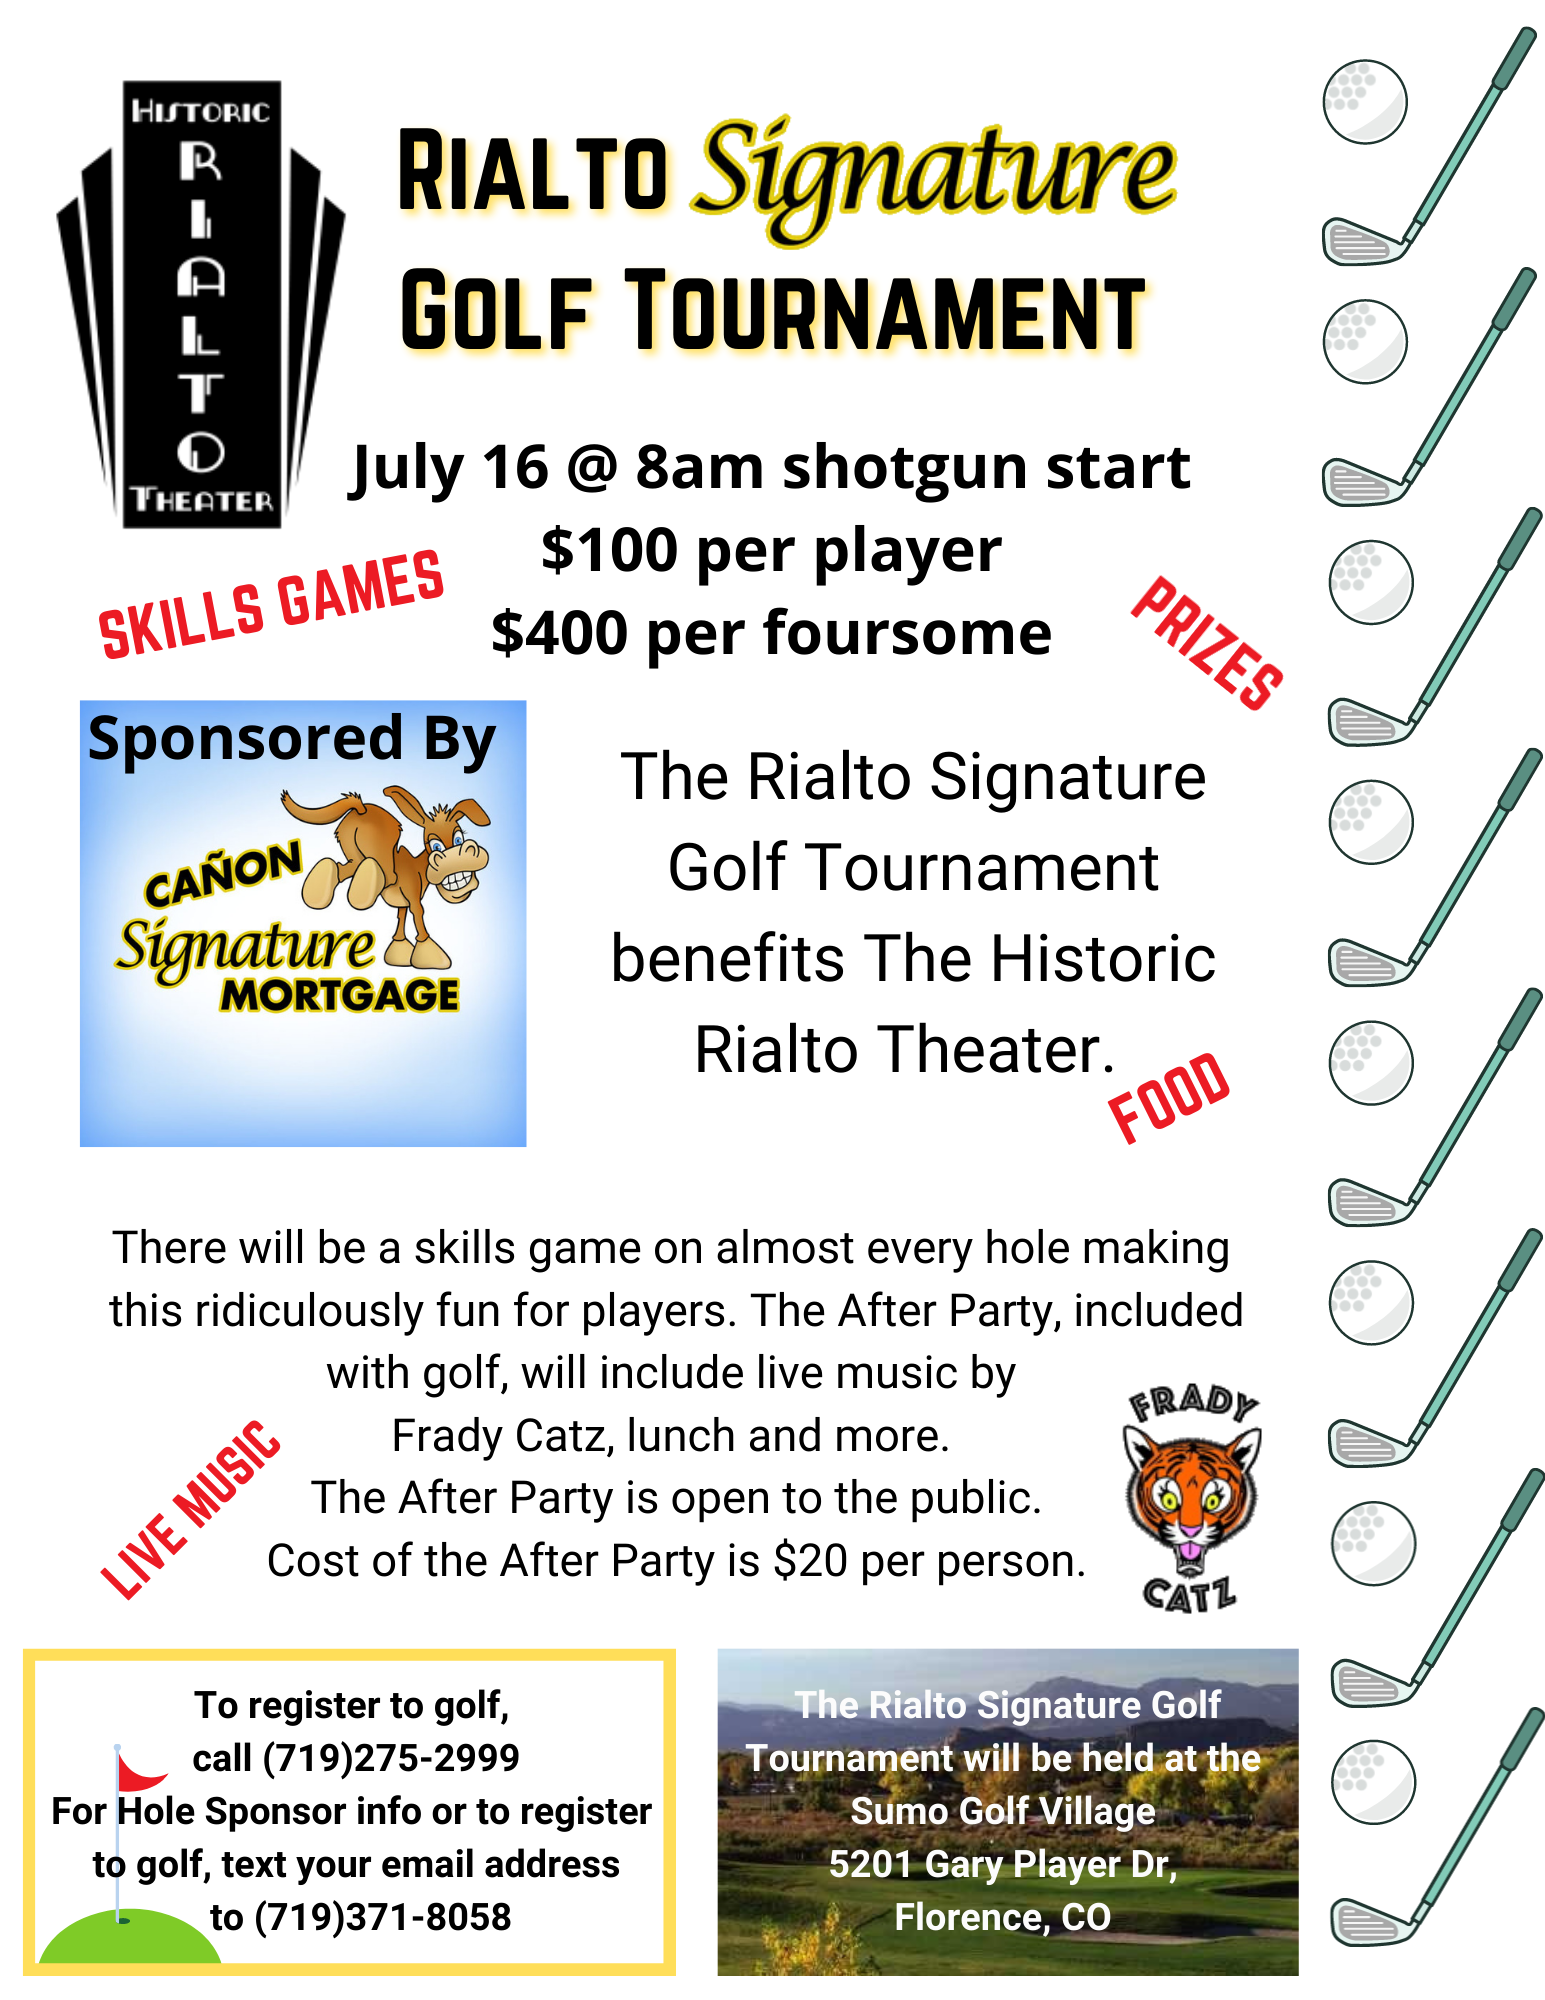 Rialto Signature Golf Tournament - July 16, 2022 - full flyer